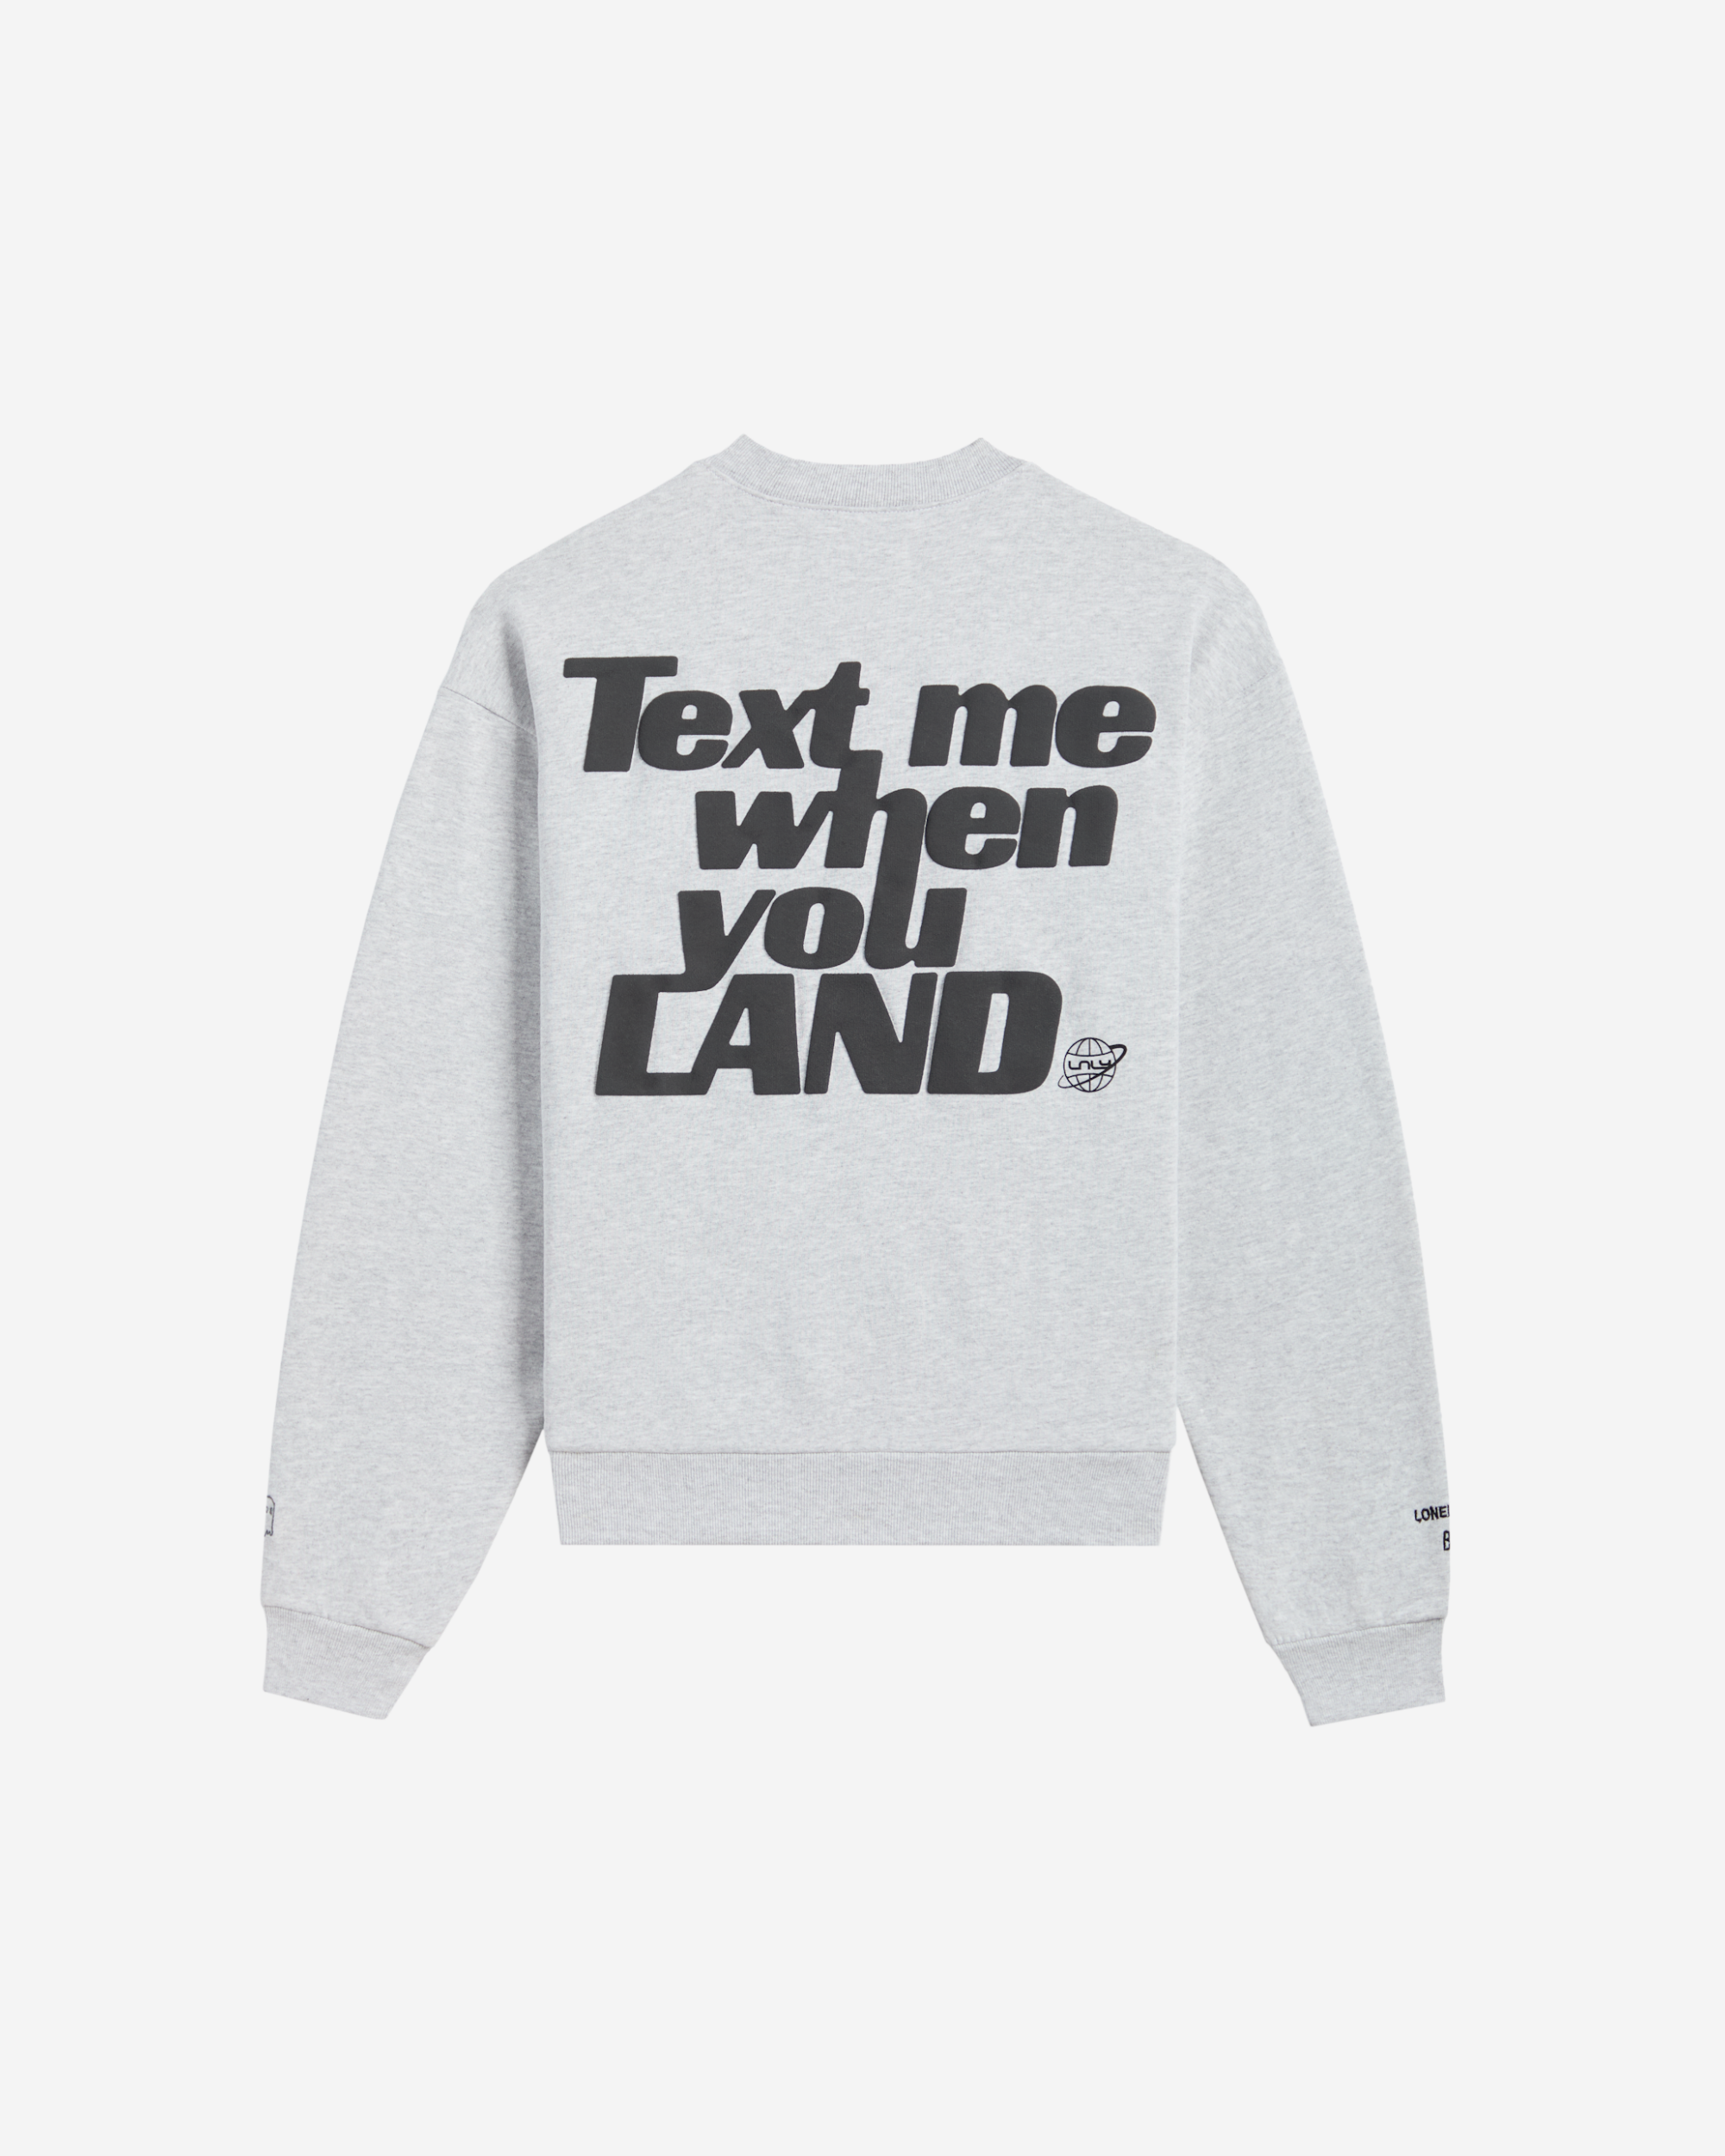 LG x BÉIS Text Me When You Land Heavyweight Crewneck Sweater